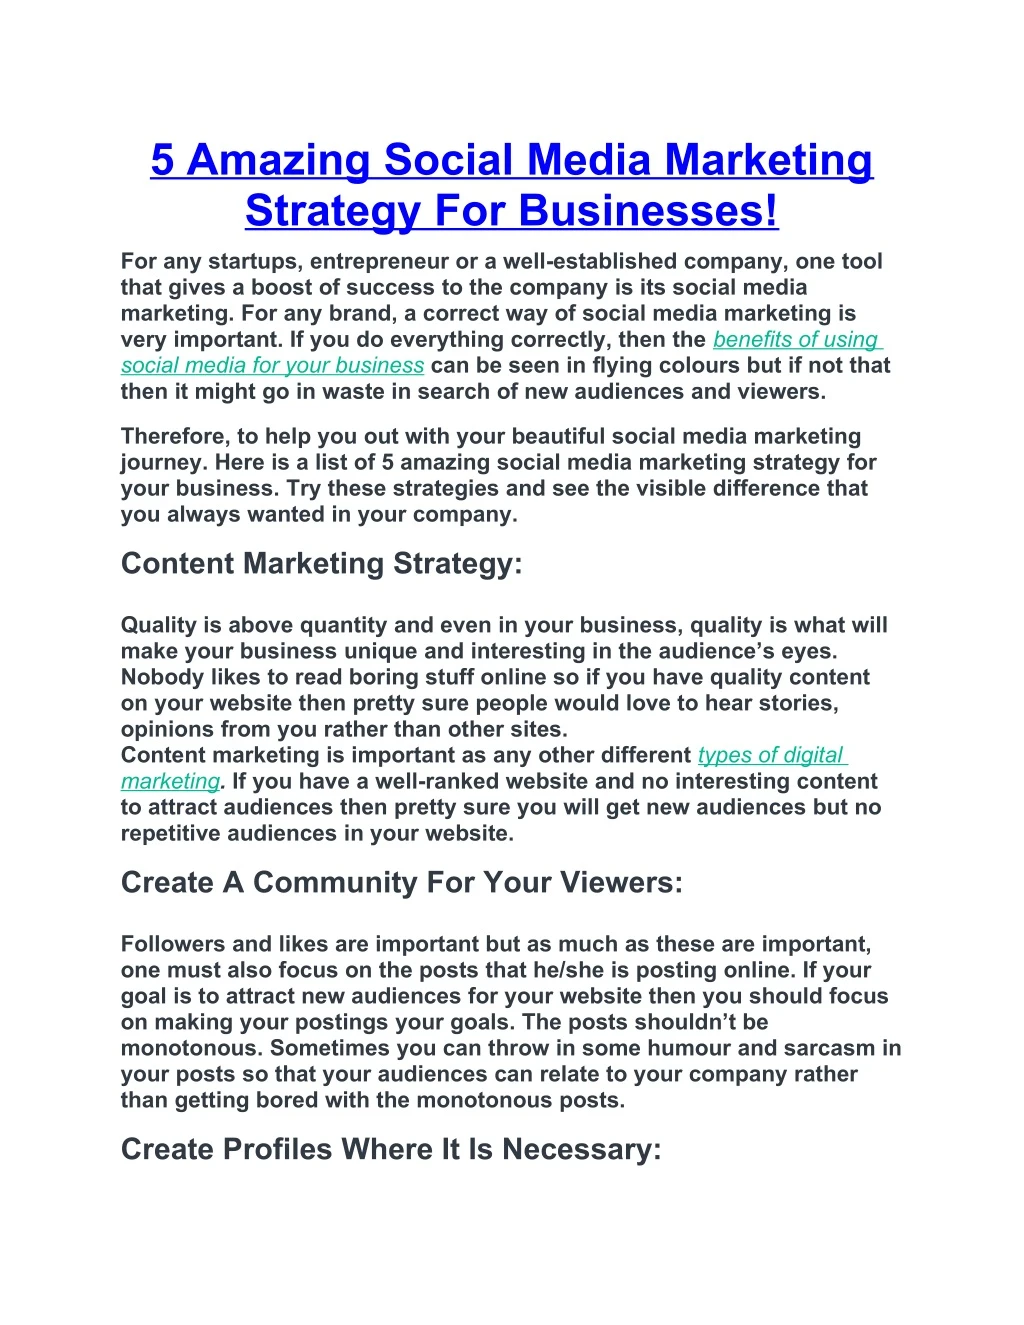 5 amazing social media marketing strategy